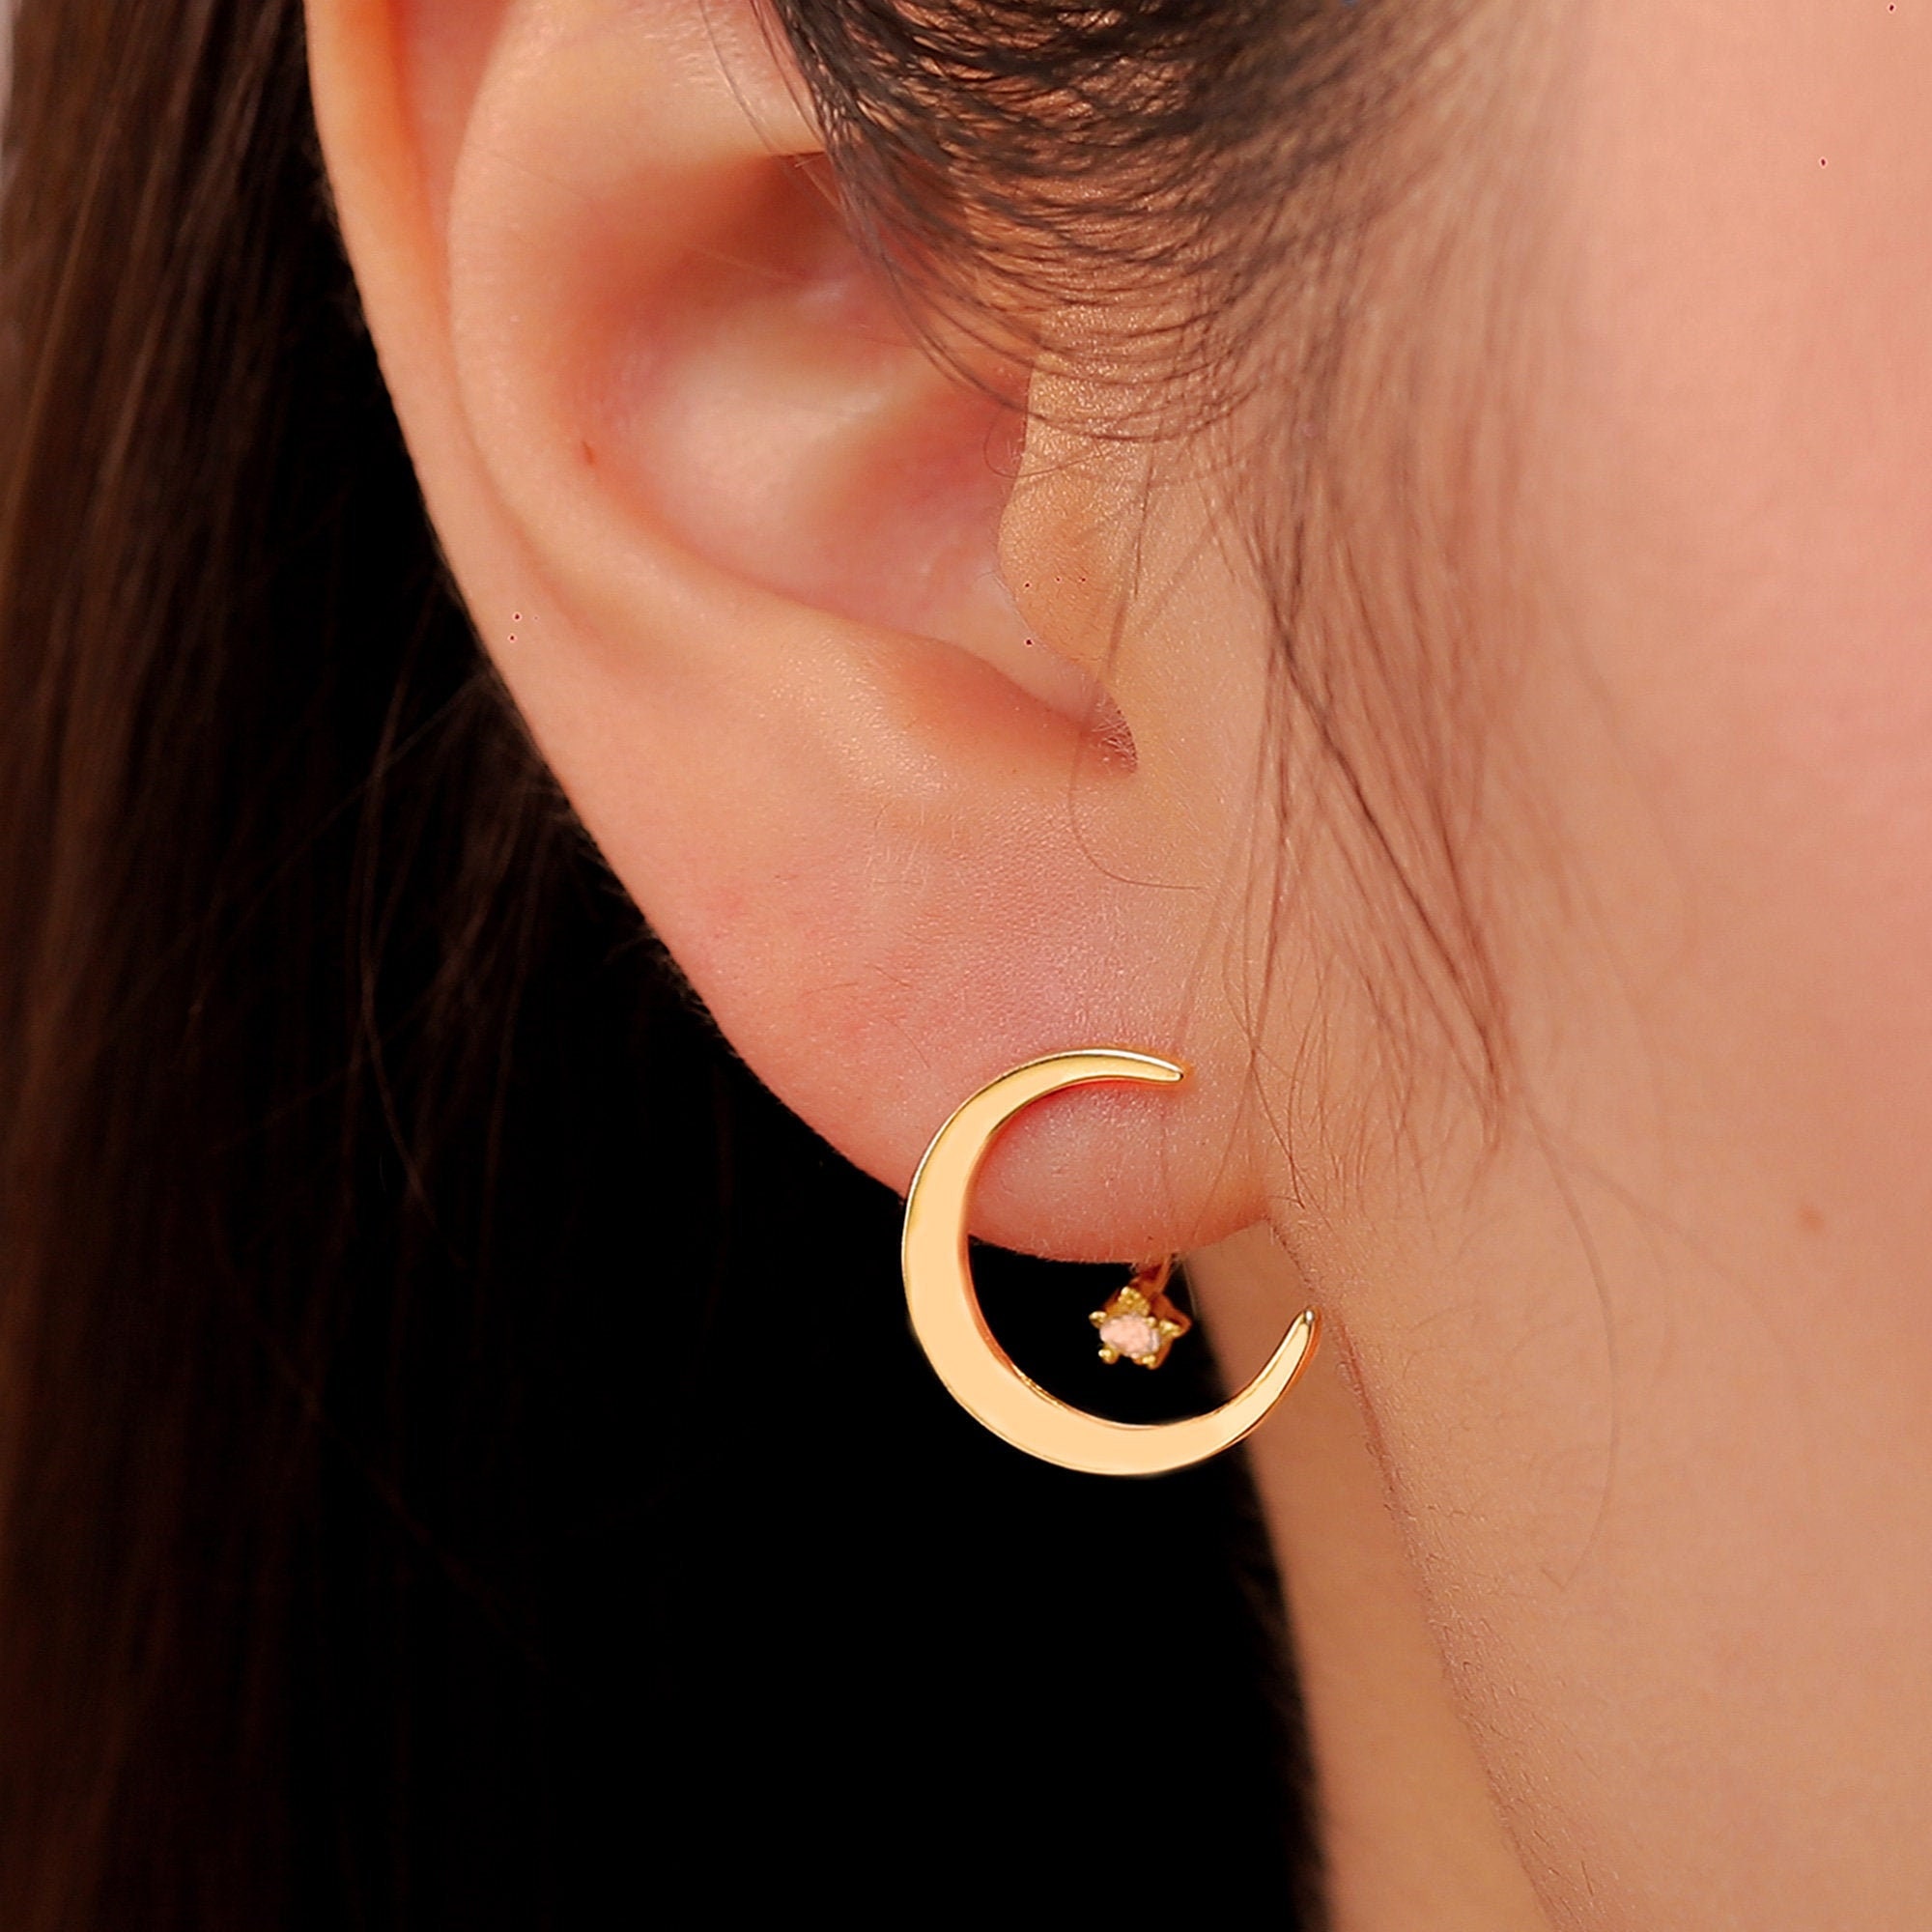 Crescent Moon Studs Tiny Gold Earrings Stud Earrings Gold Crescent Moon  Earrings Minimalist Earrings Gold Studs Gift for Her - Etsy | Minimalist earrings  gold, Moon earrings studs, Moon studs